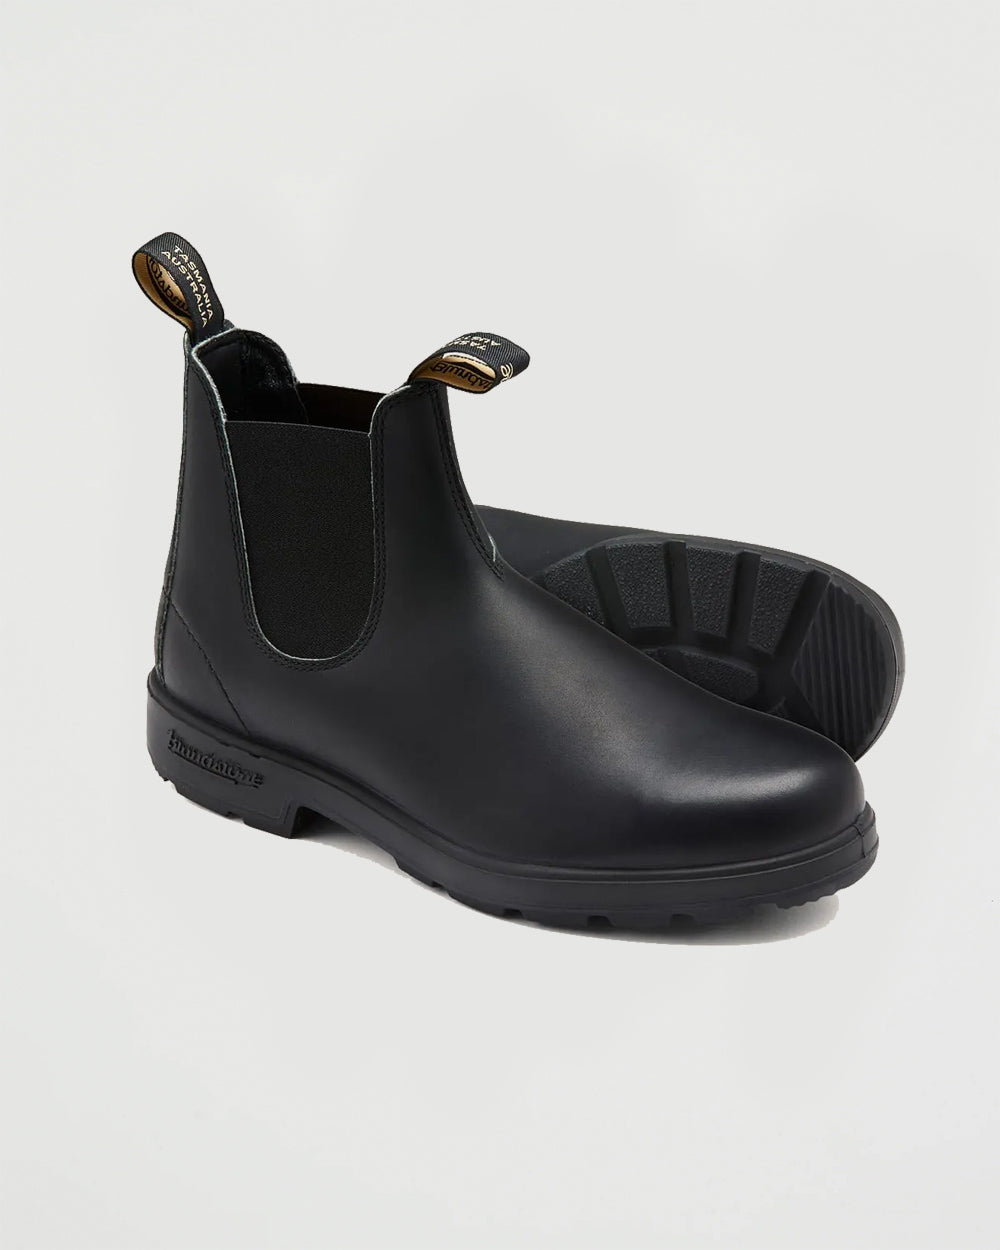 Blundstone 510 Original Black Shoes Leather Unisex